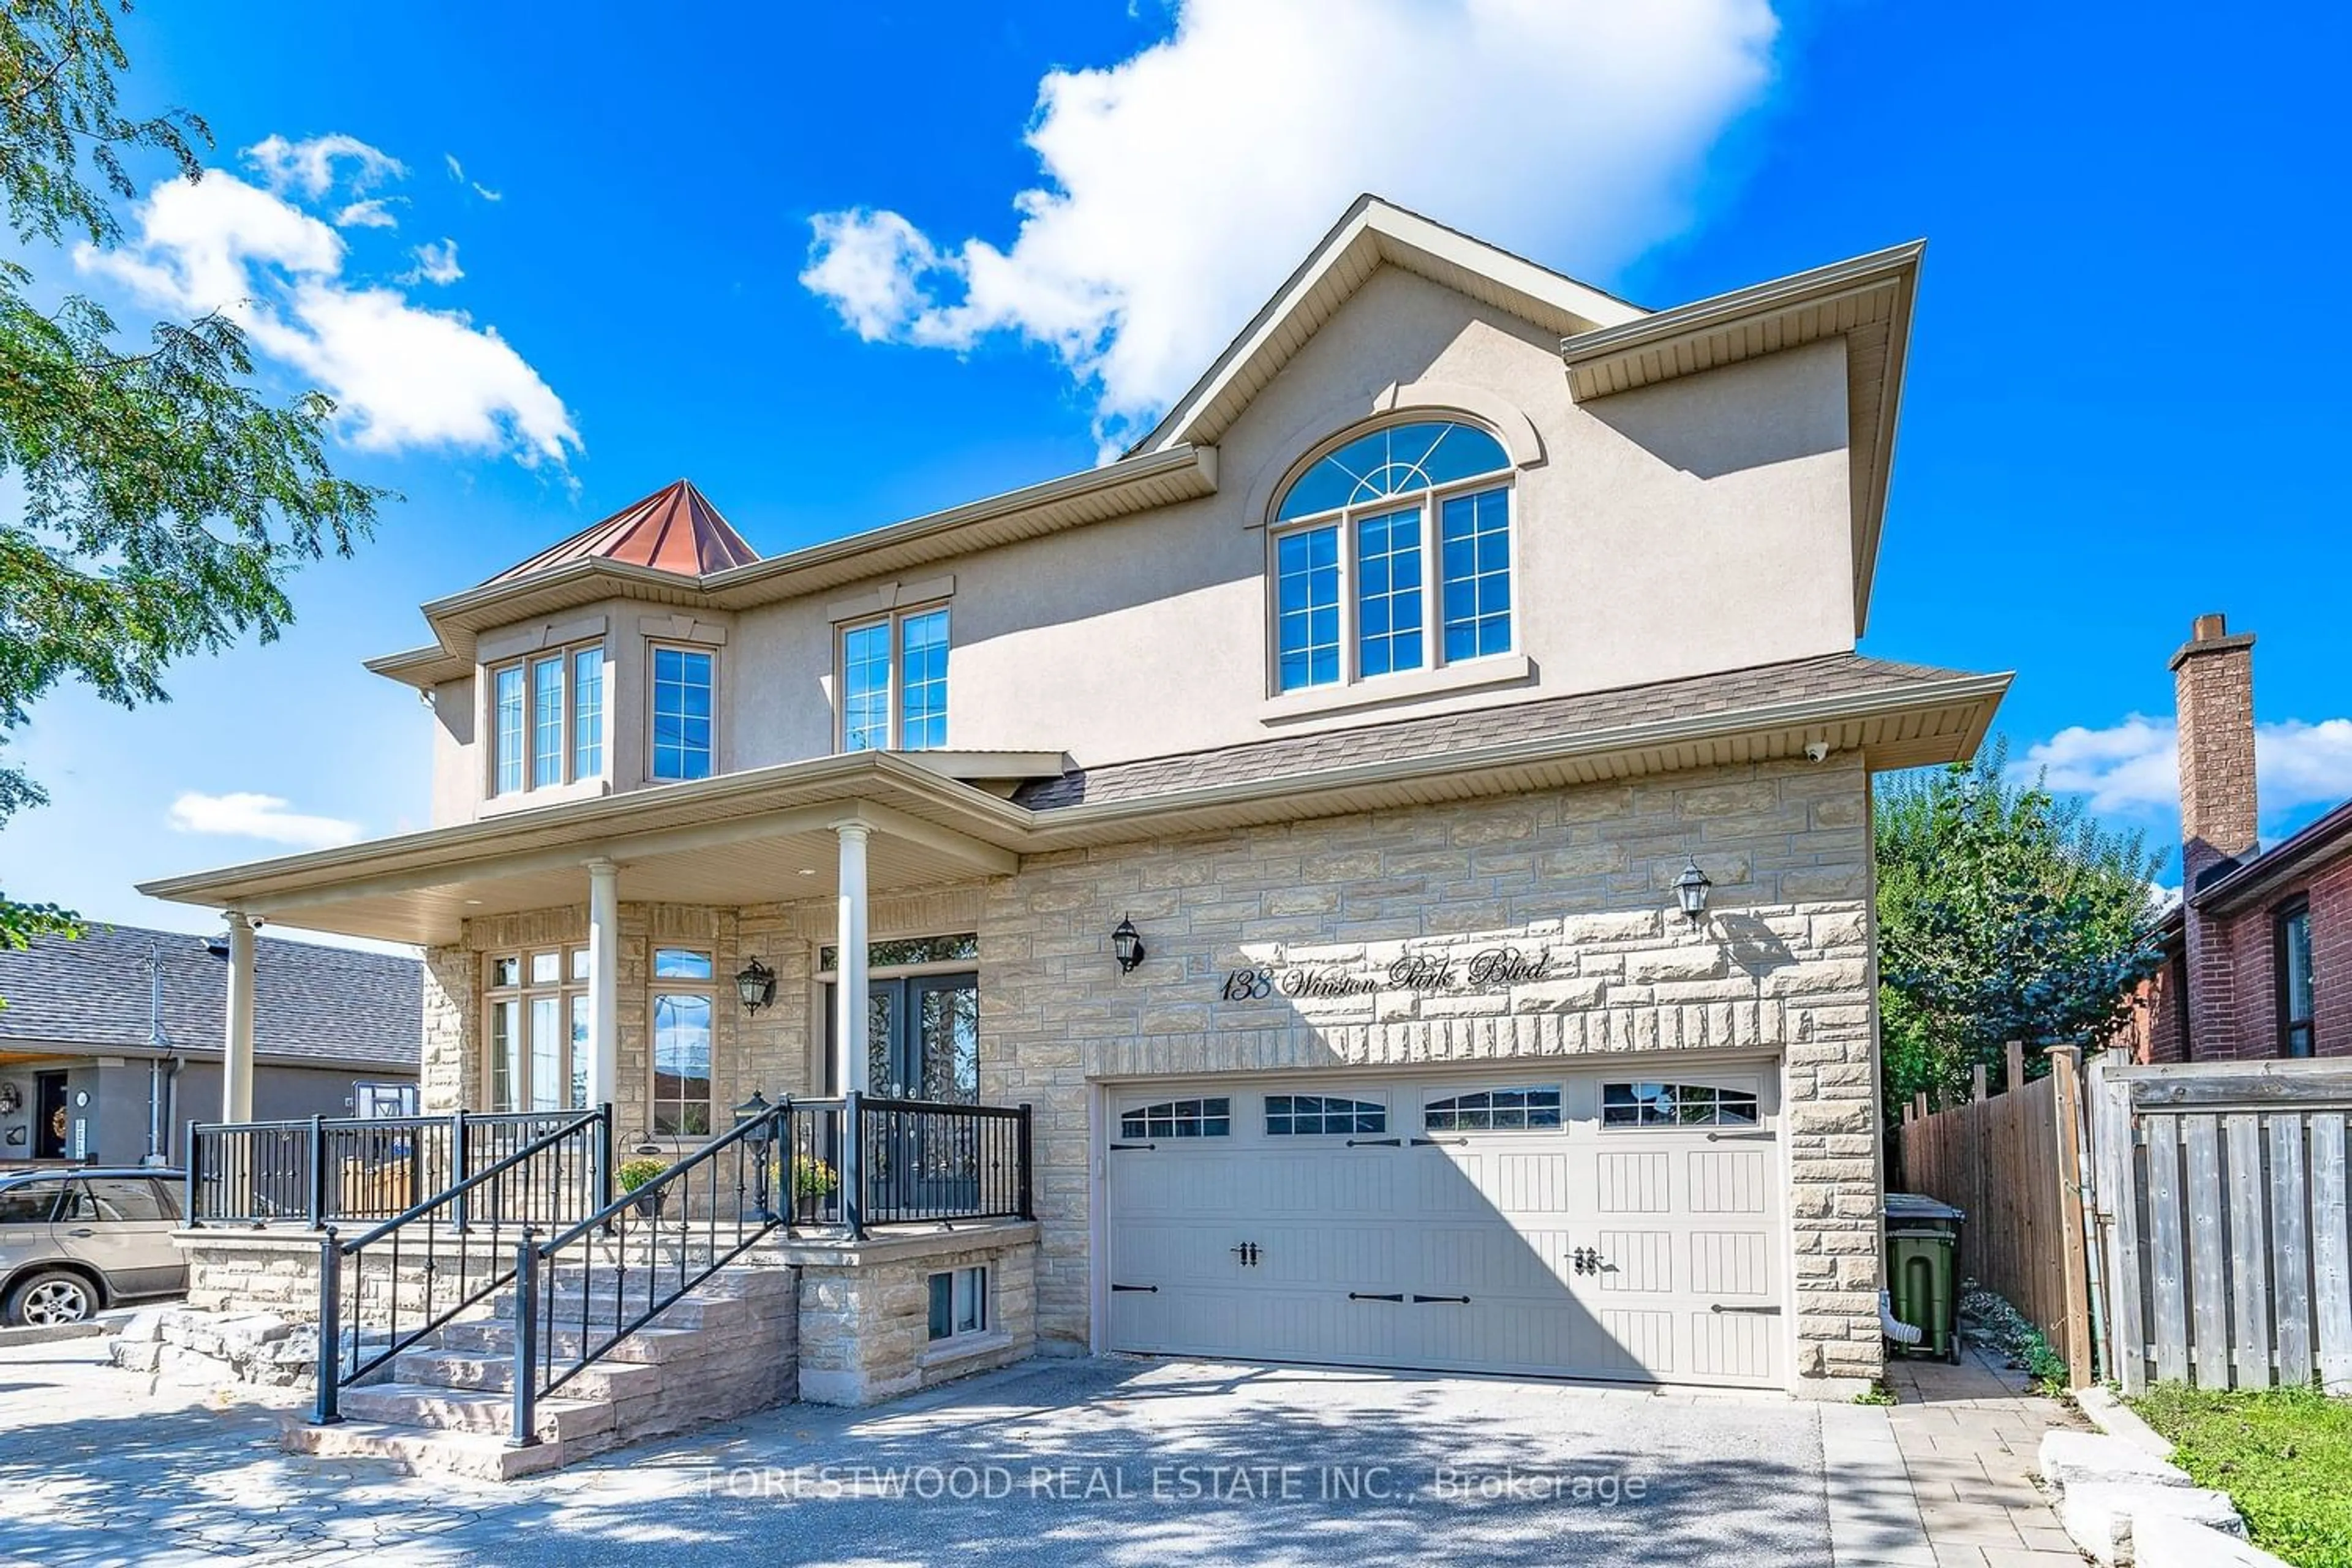 Home with brick exterior material for 138 Winston Park Blvd, Toronto Ontario M3K 1C5